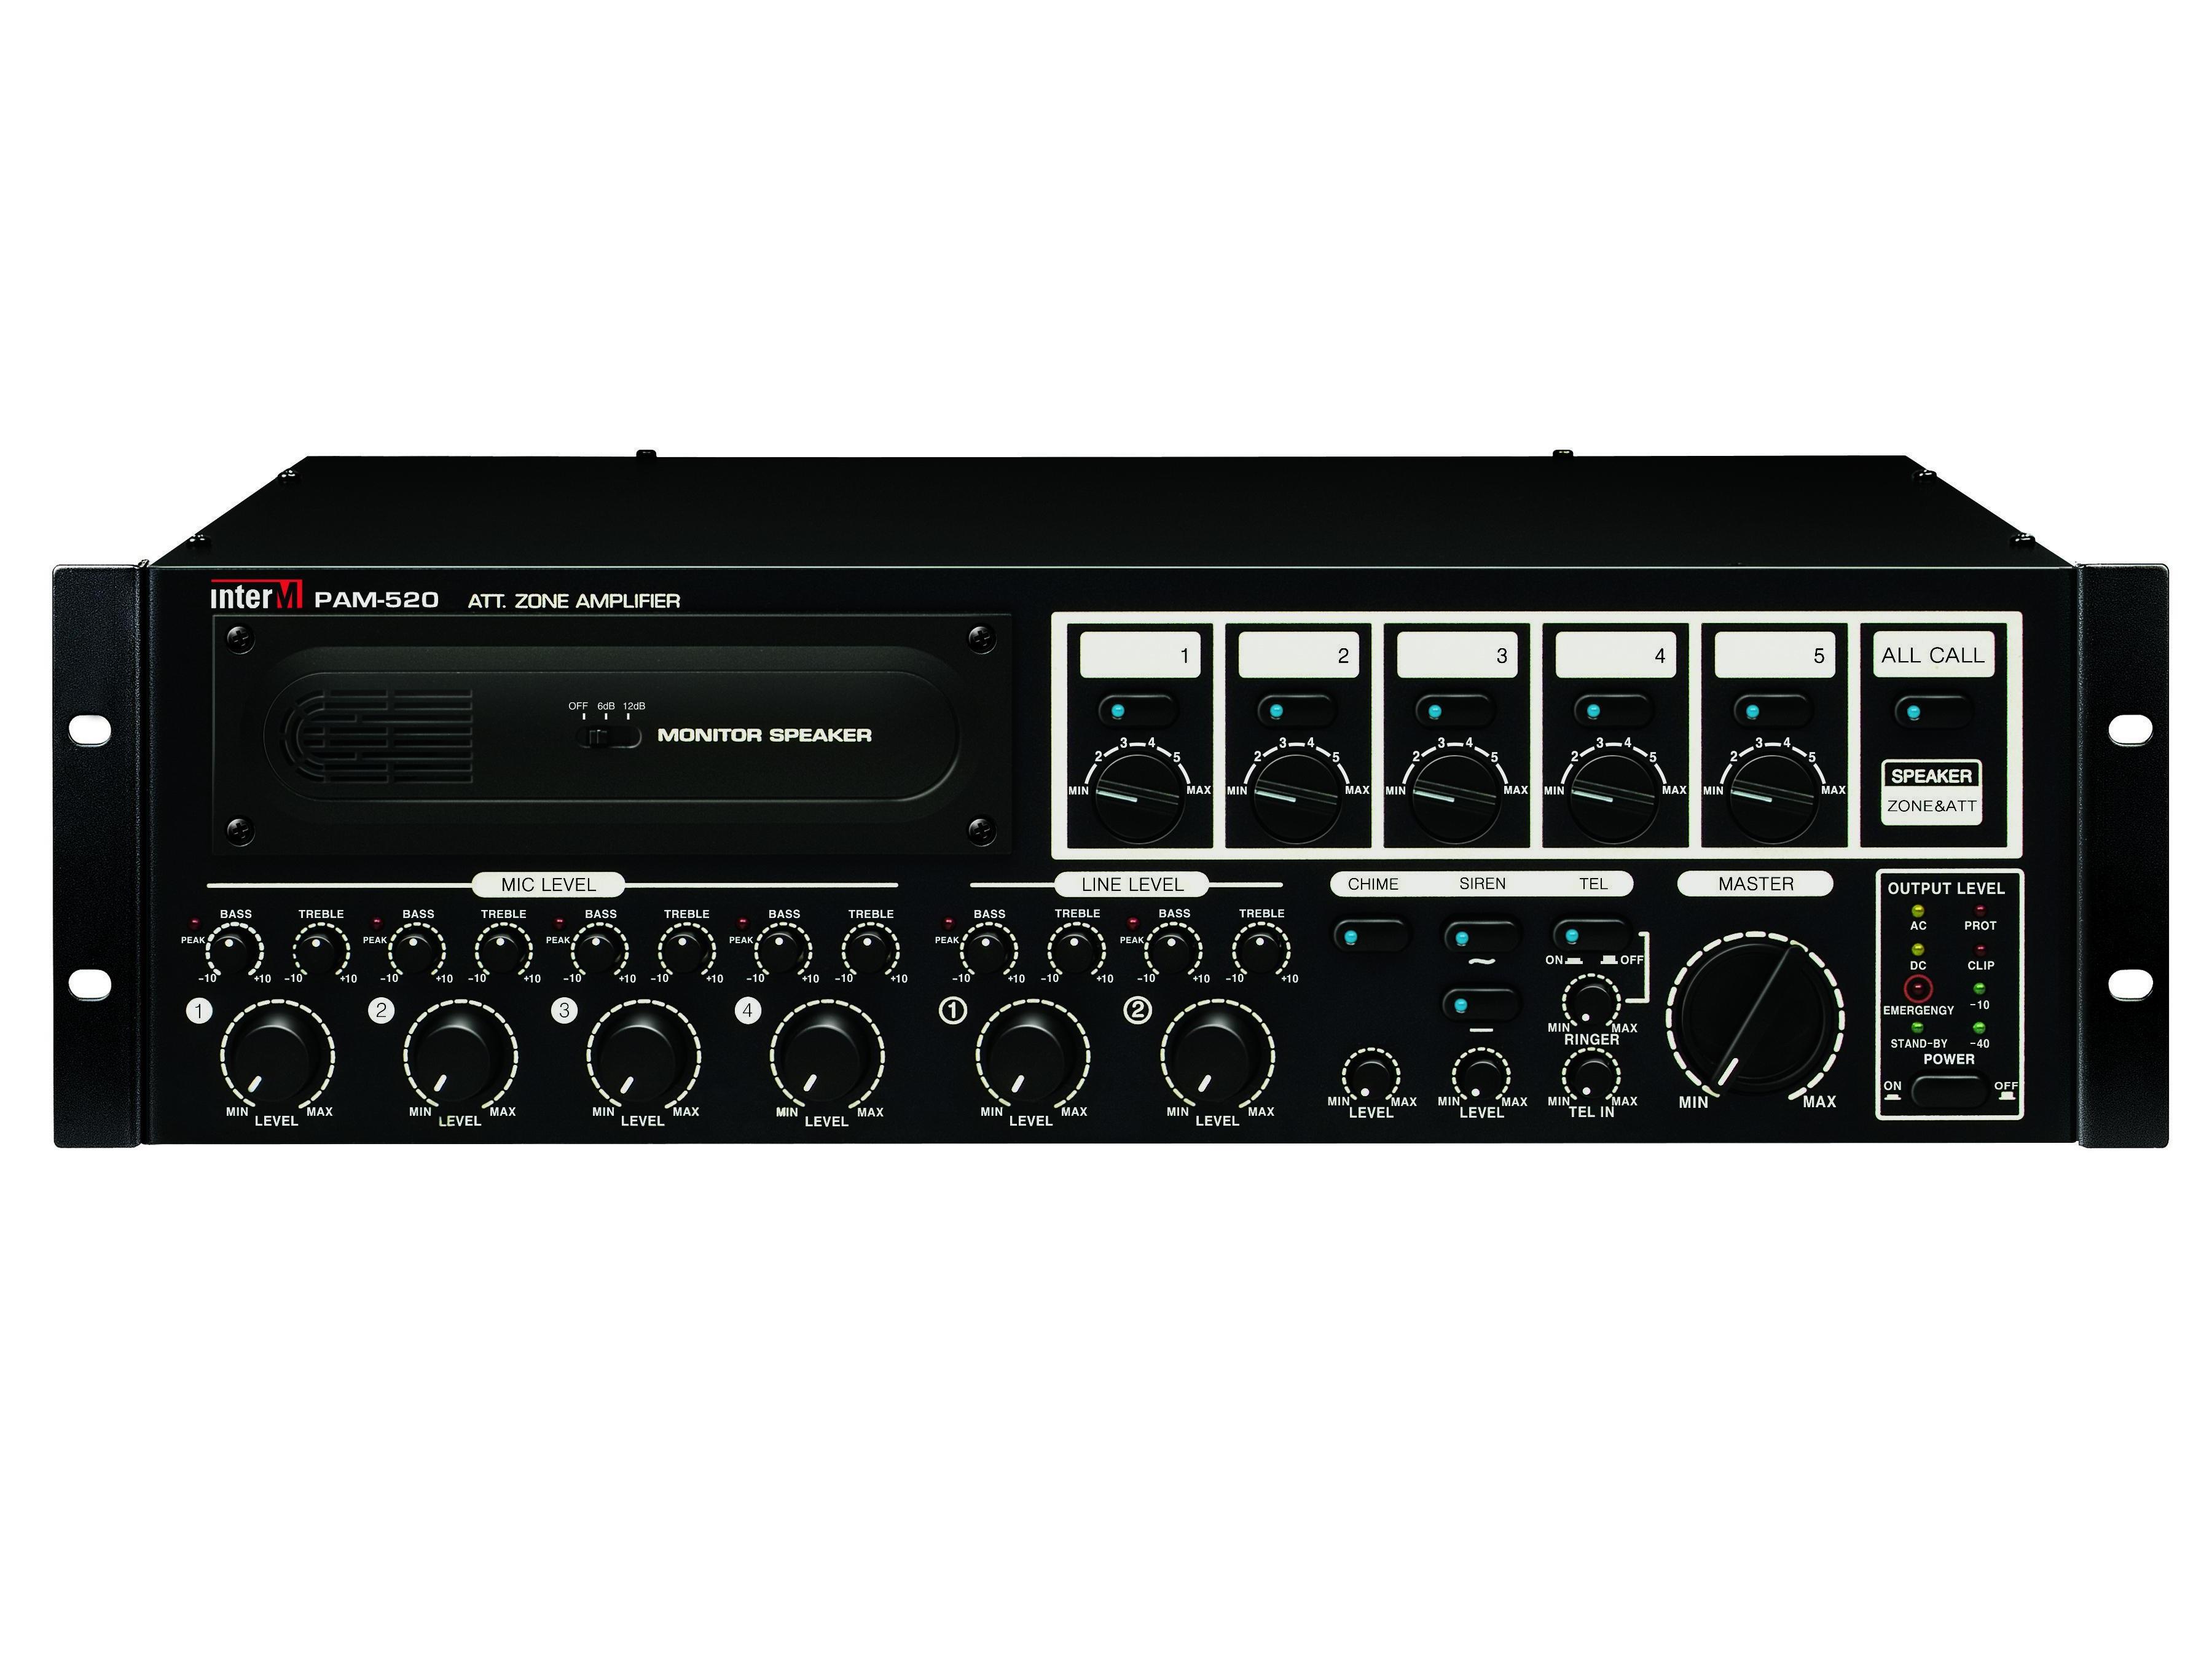 PAM-520 240W Modular Mixing Amplifier/6 Audio In w Trim/5 Zone Selectors w Attenuator/DC 24V/Backup/Chime/Siren by Inter-M